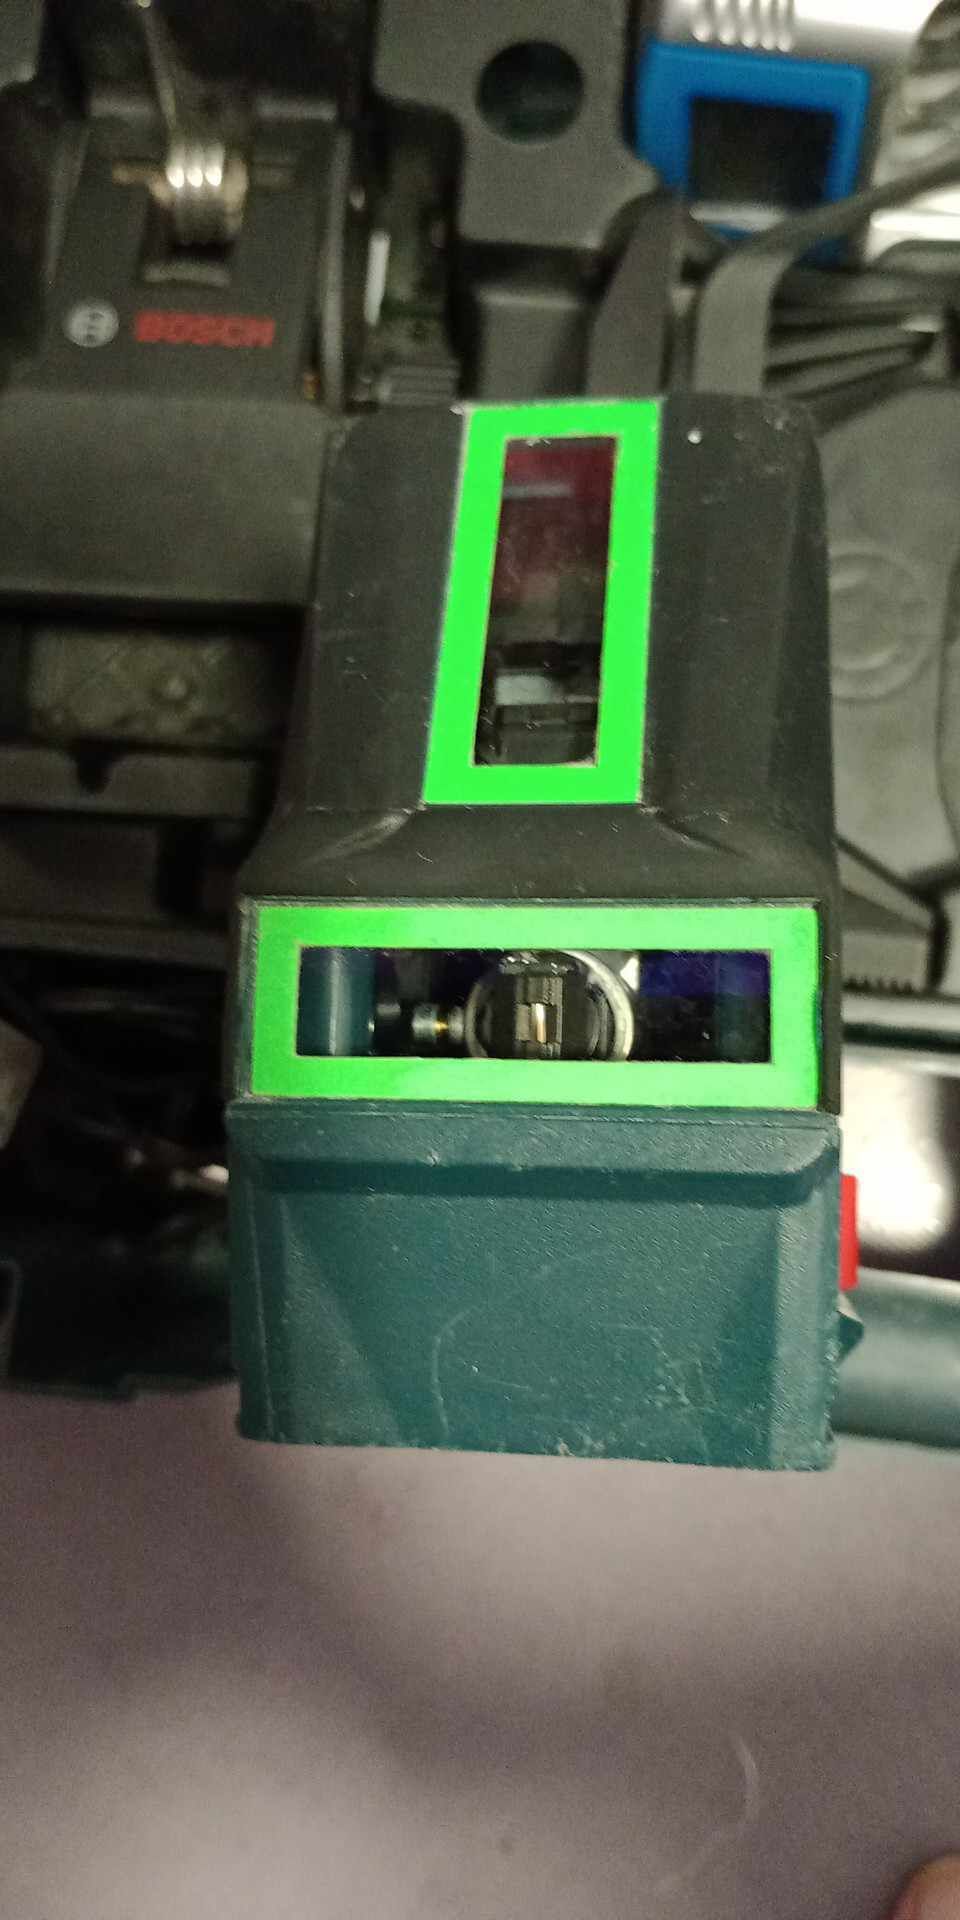 Laser nivela bosch gcl 2-15G lini verzi